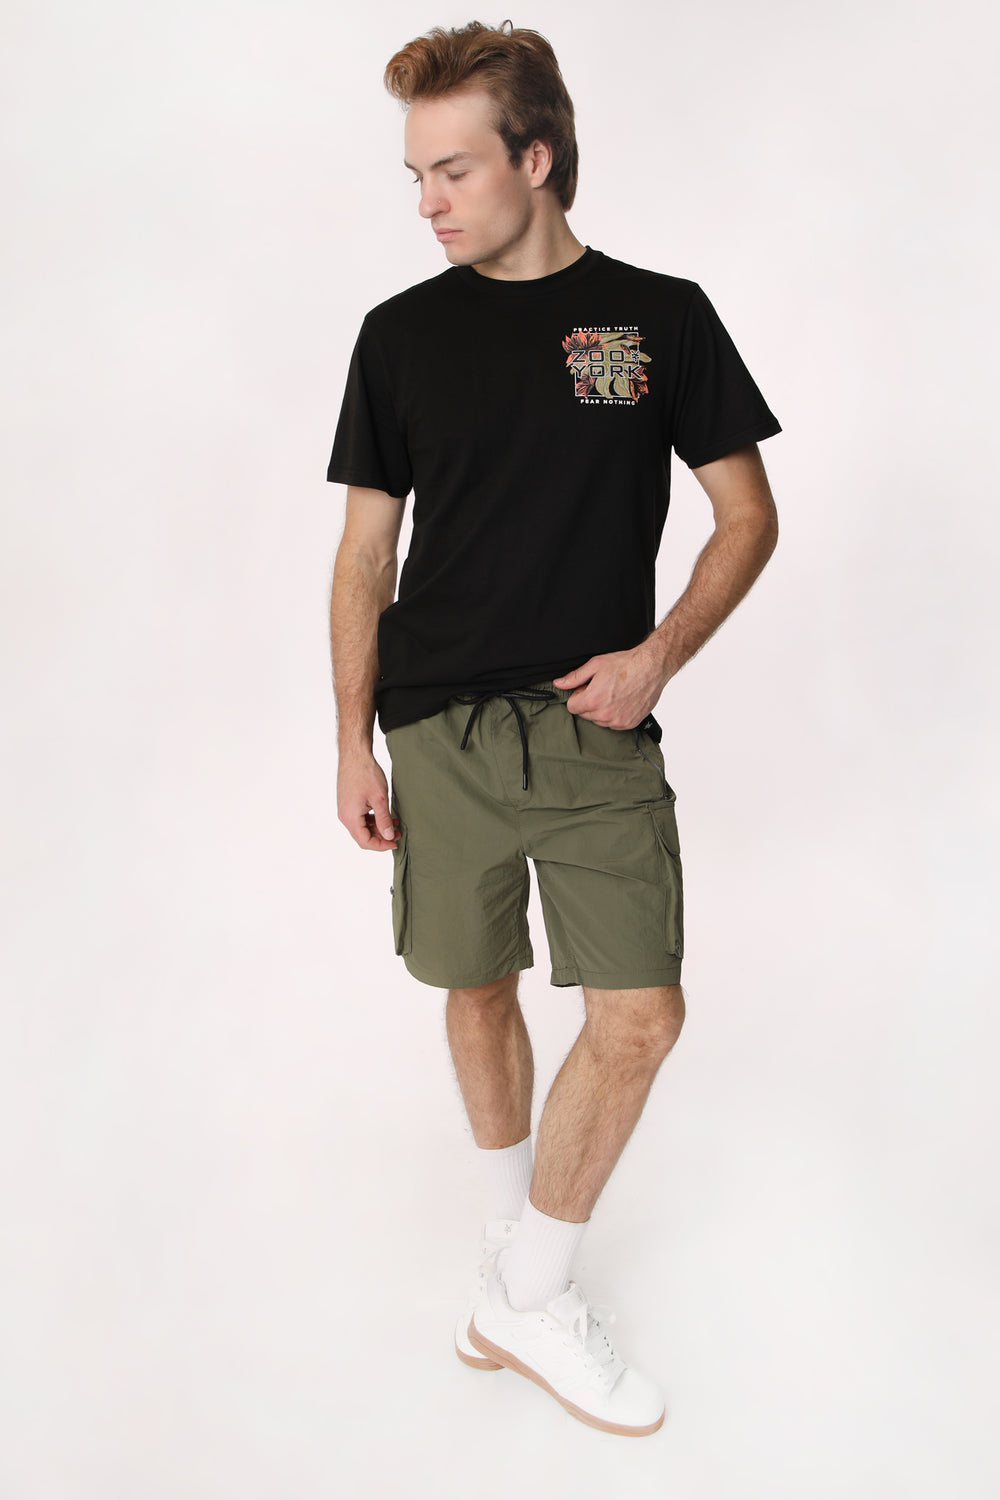 West49 Mens Nylon Cargo Shorts with Zip Dark Green